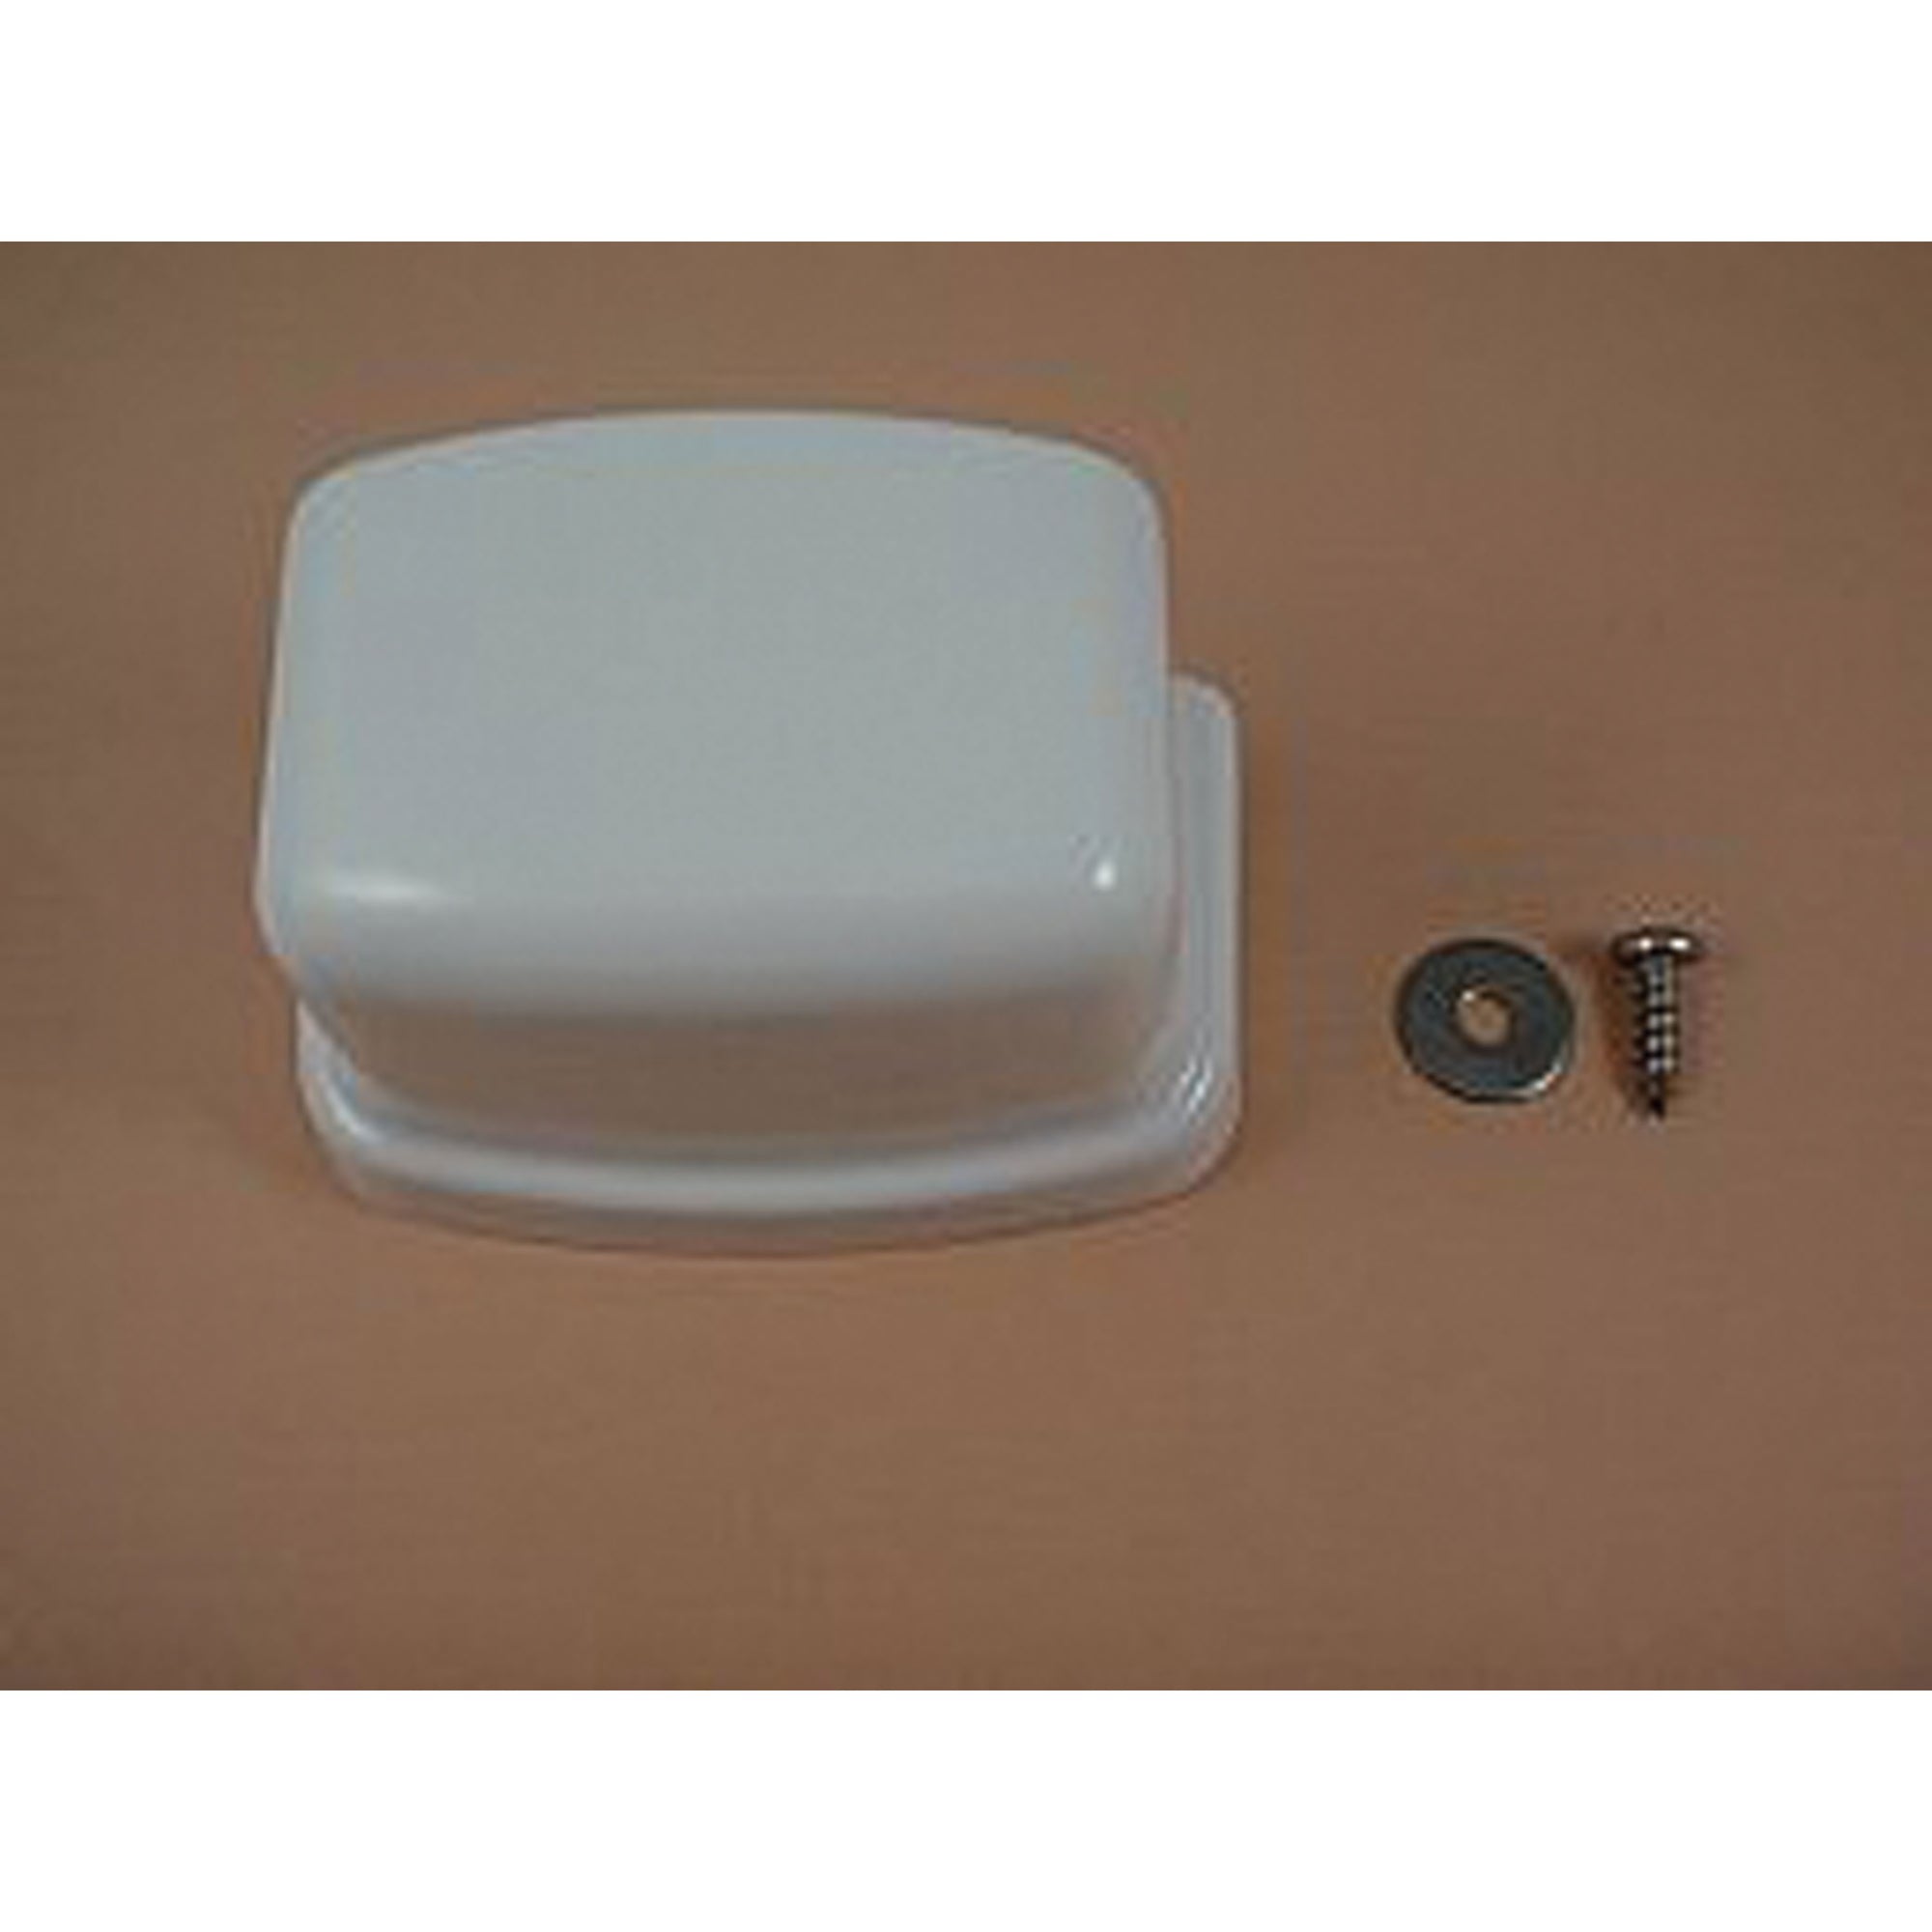 Dometic 385310796 Toilet Vacuum Breaker Cover Kit - Bone